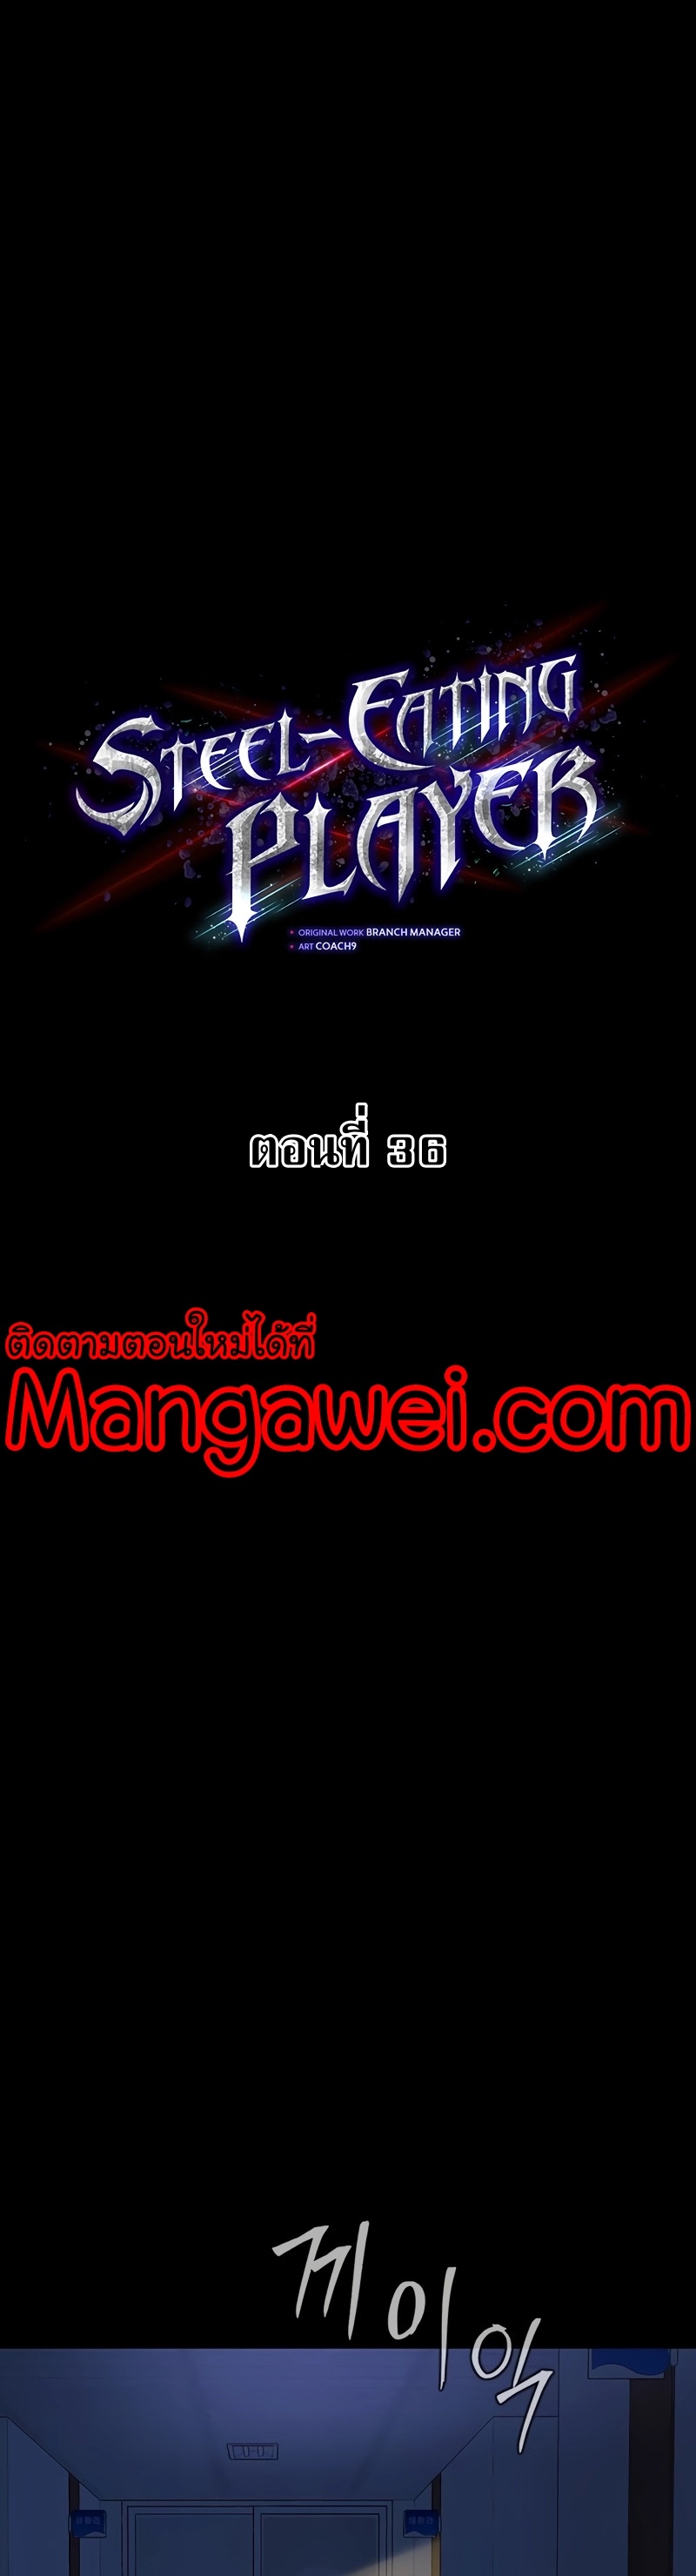 Steel eating player Wei Manga Manwha 36 (4)